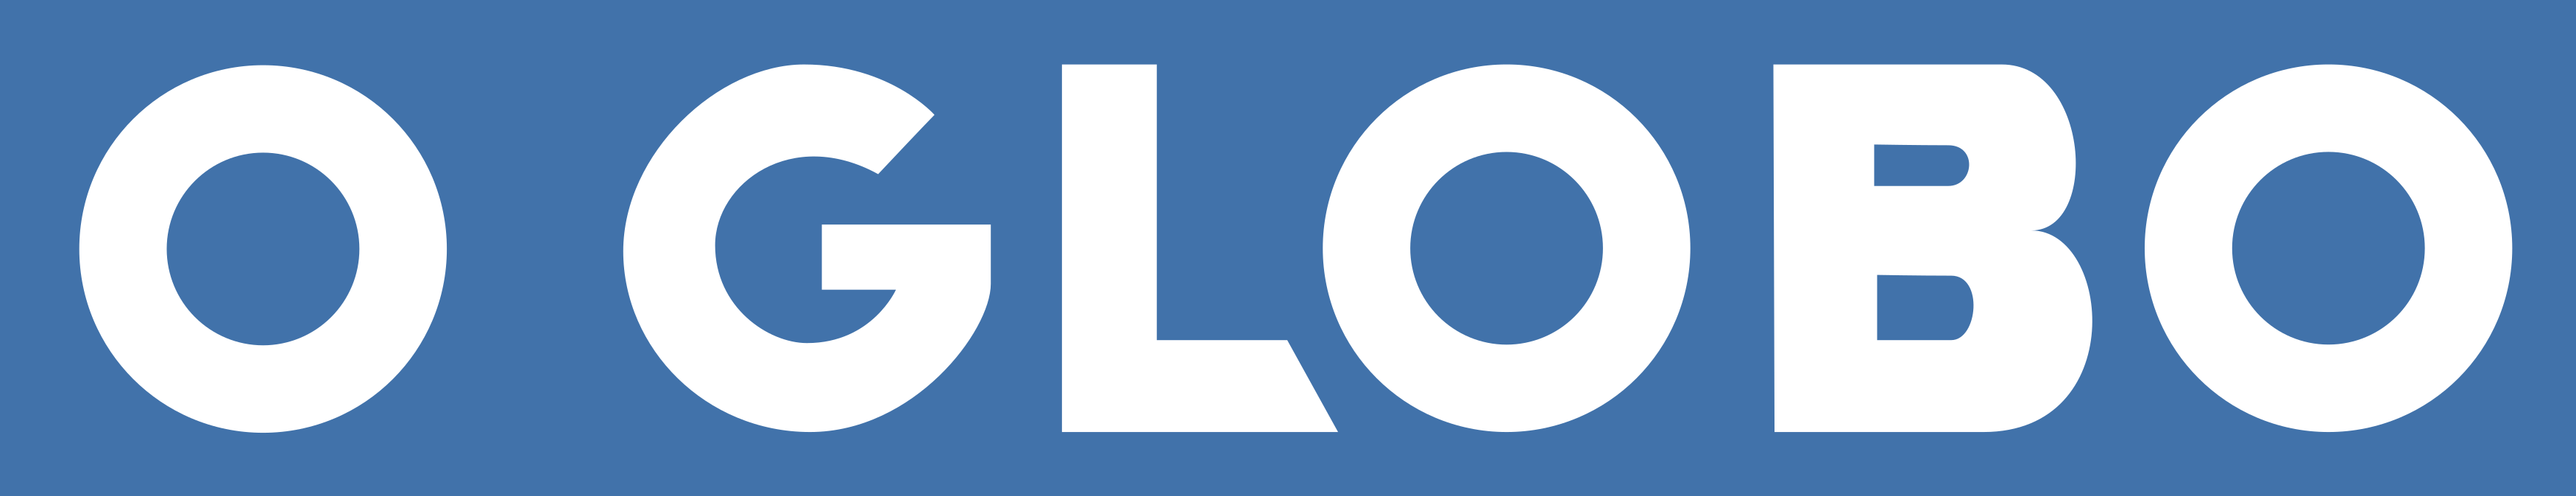 Image result for logo o globo